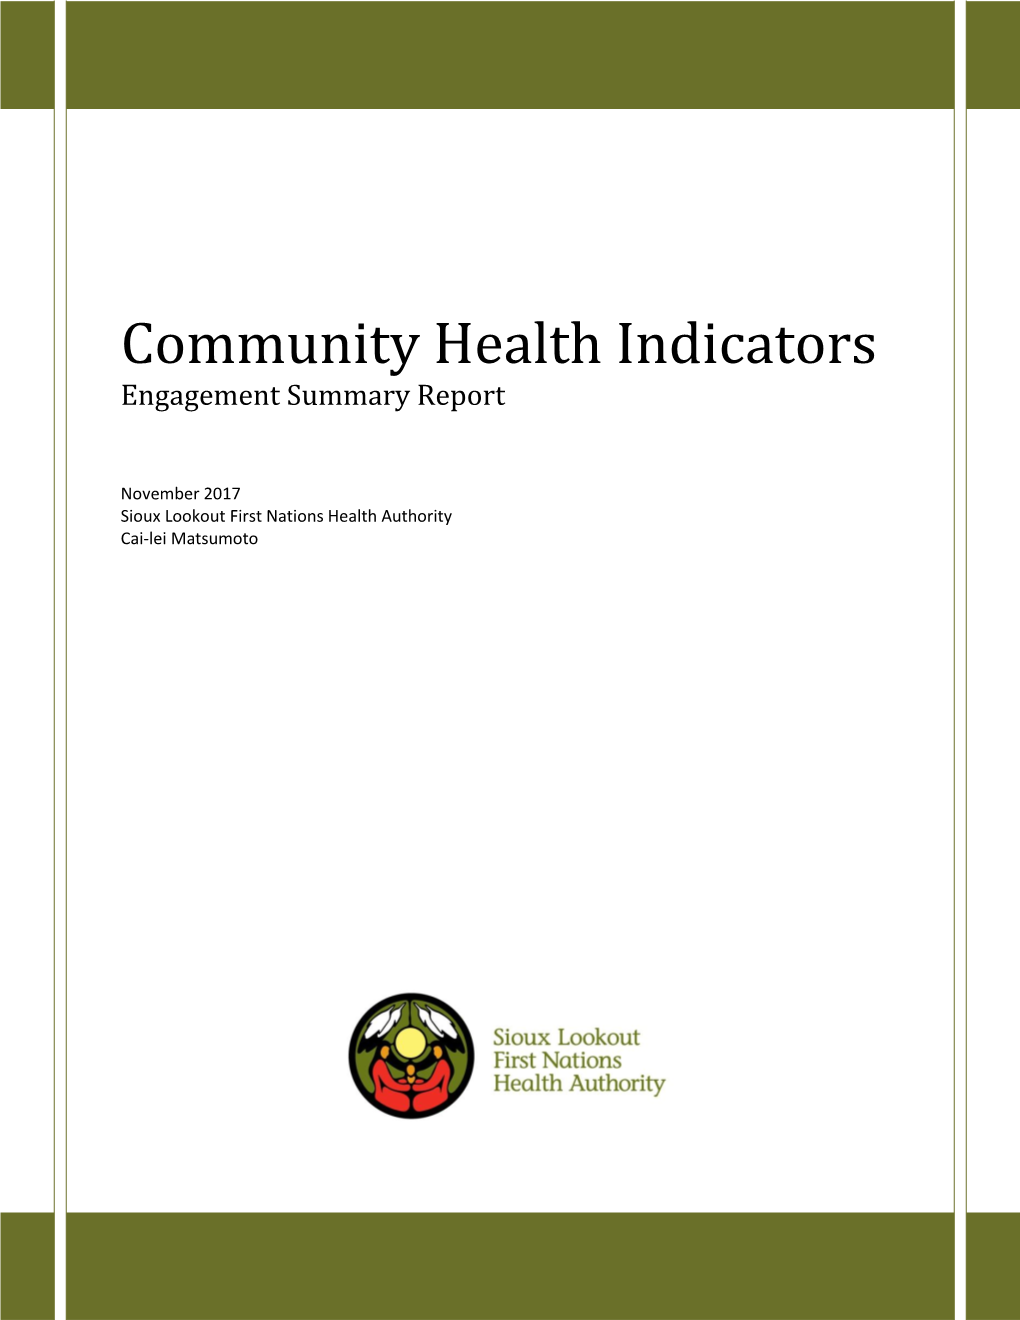 Community Health Indicators Engagement Summary Report